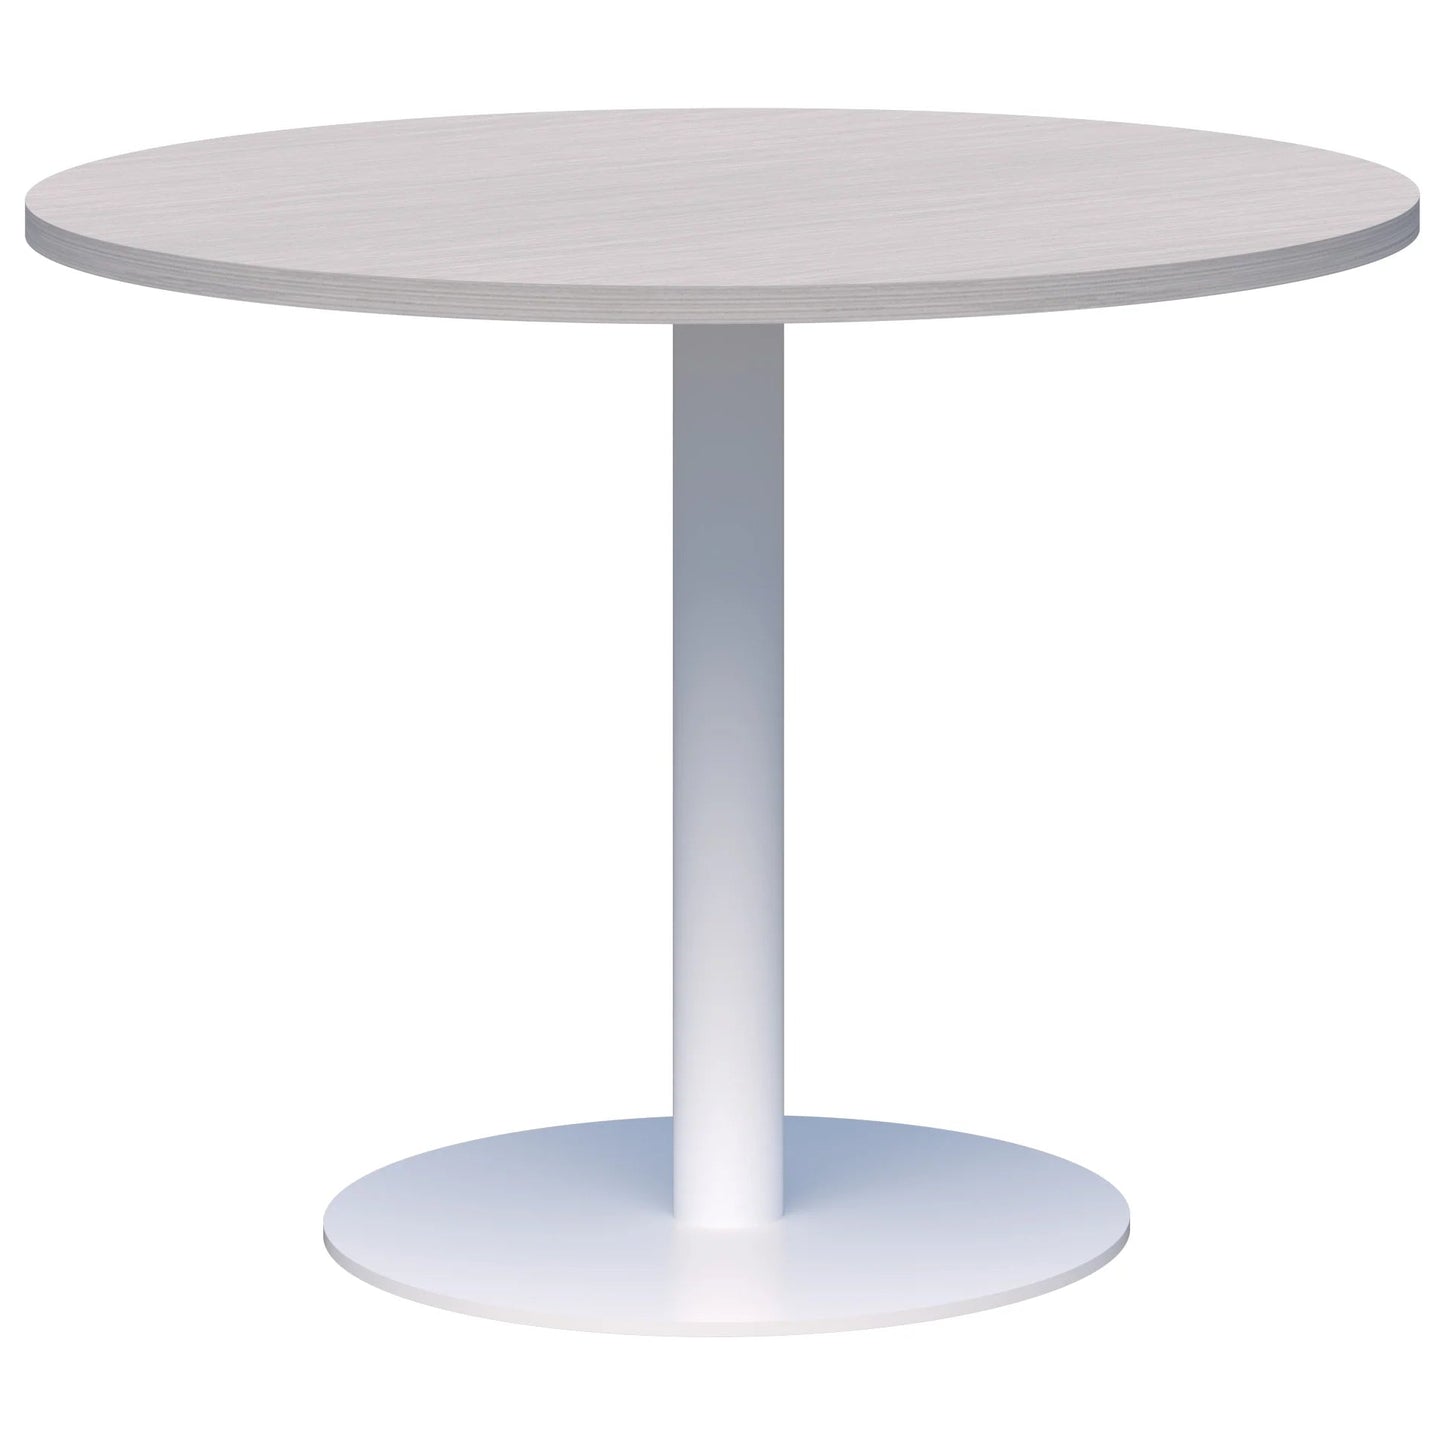 Classic Round Meeting Table Range